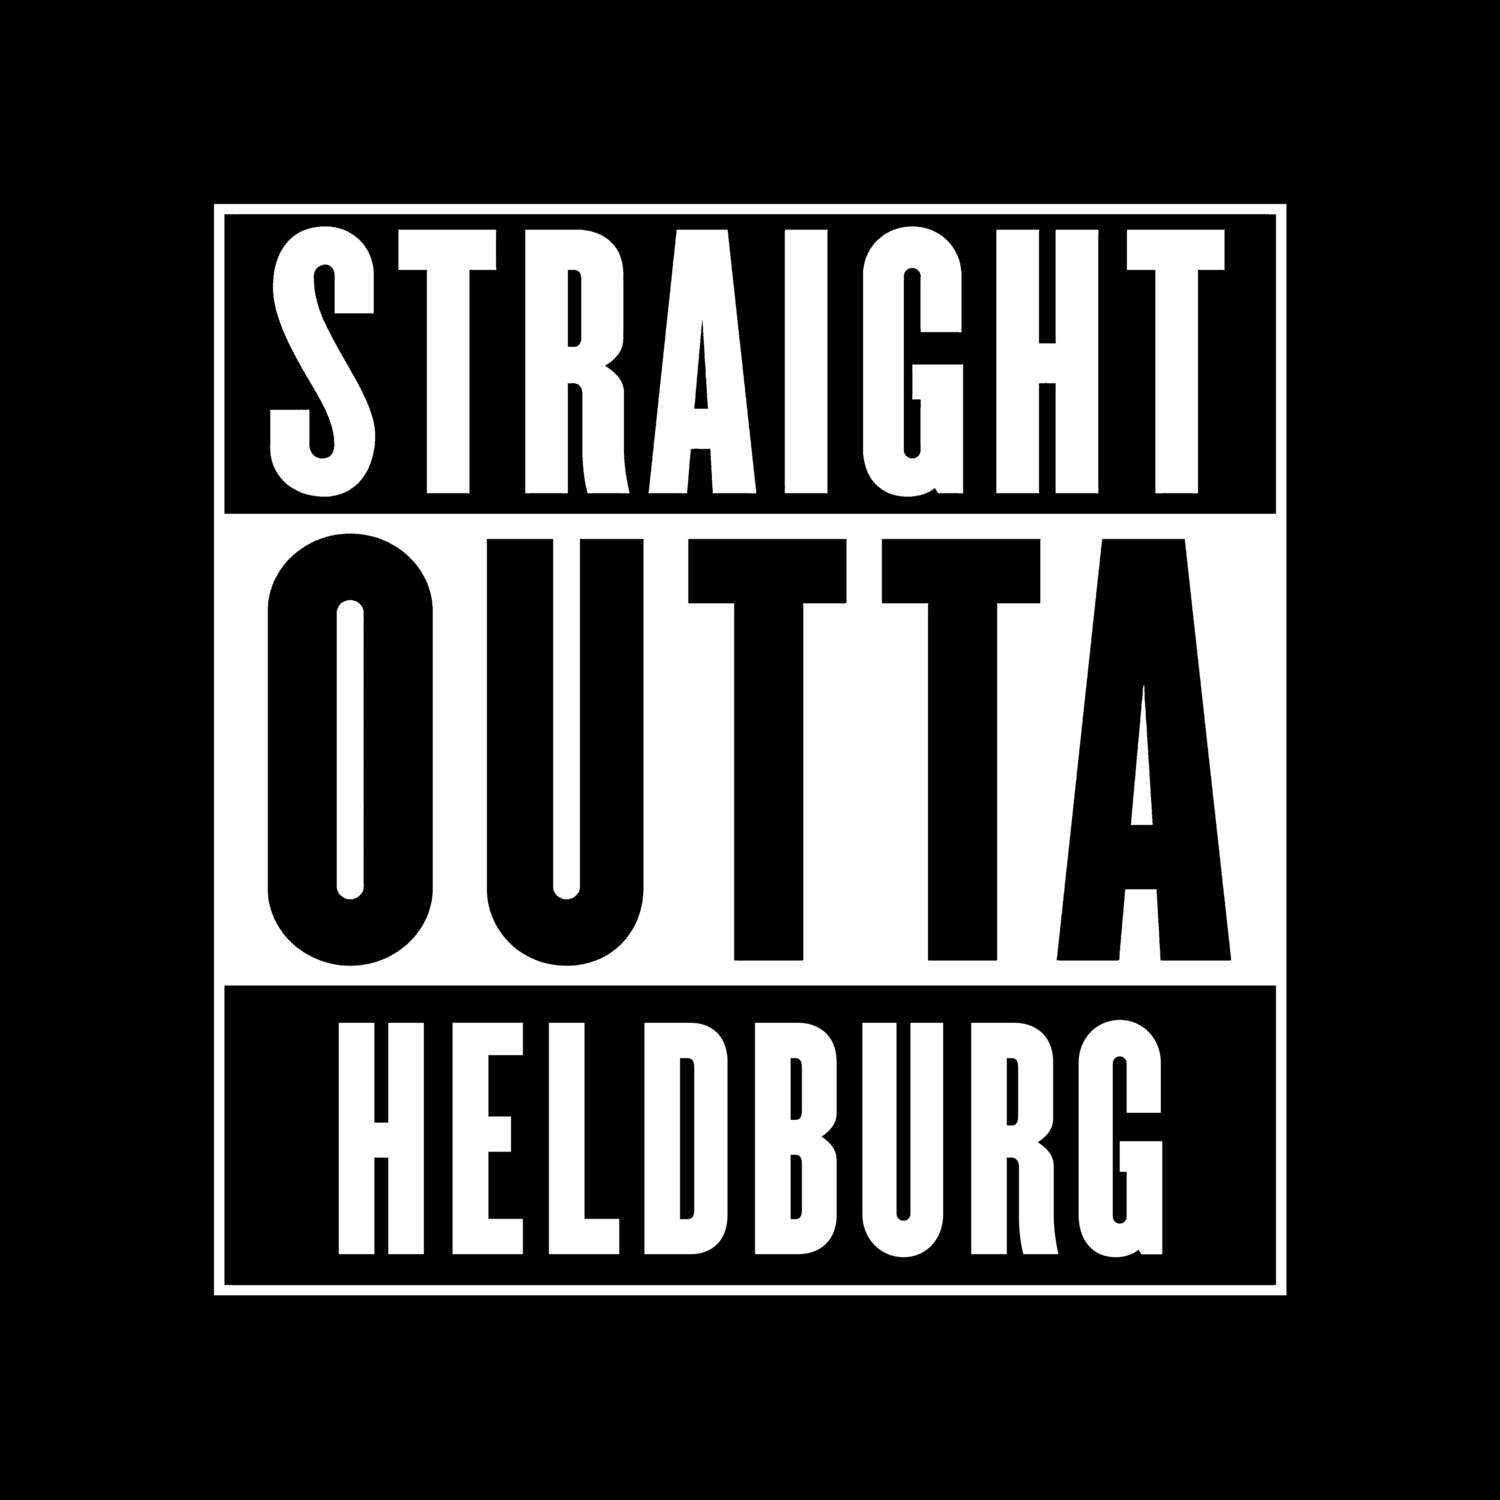 Heldburg T-Shirt »Straight Outta«